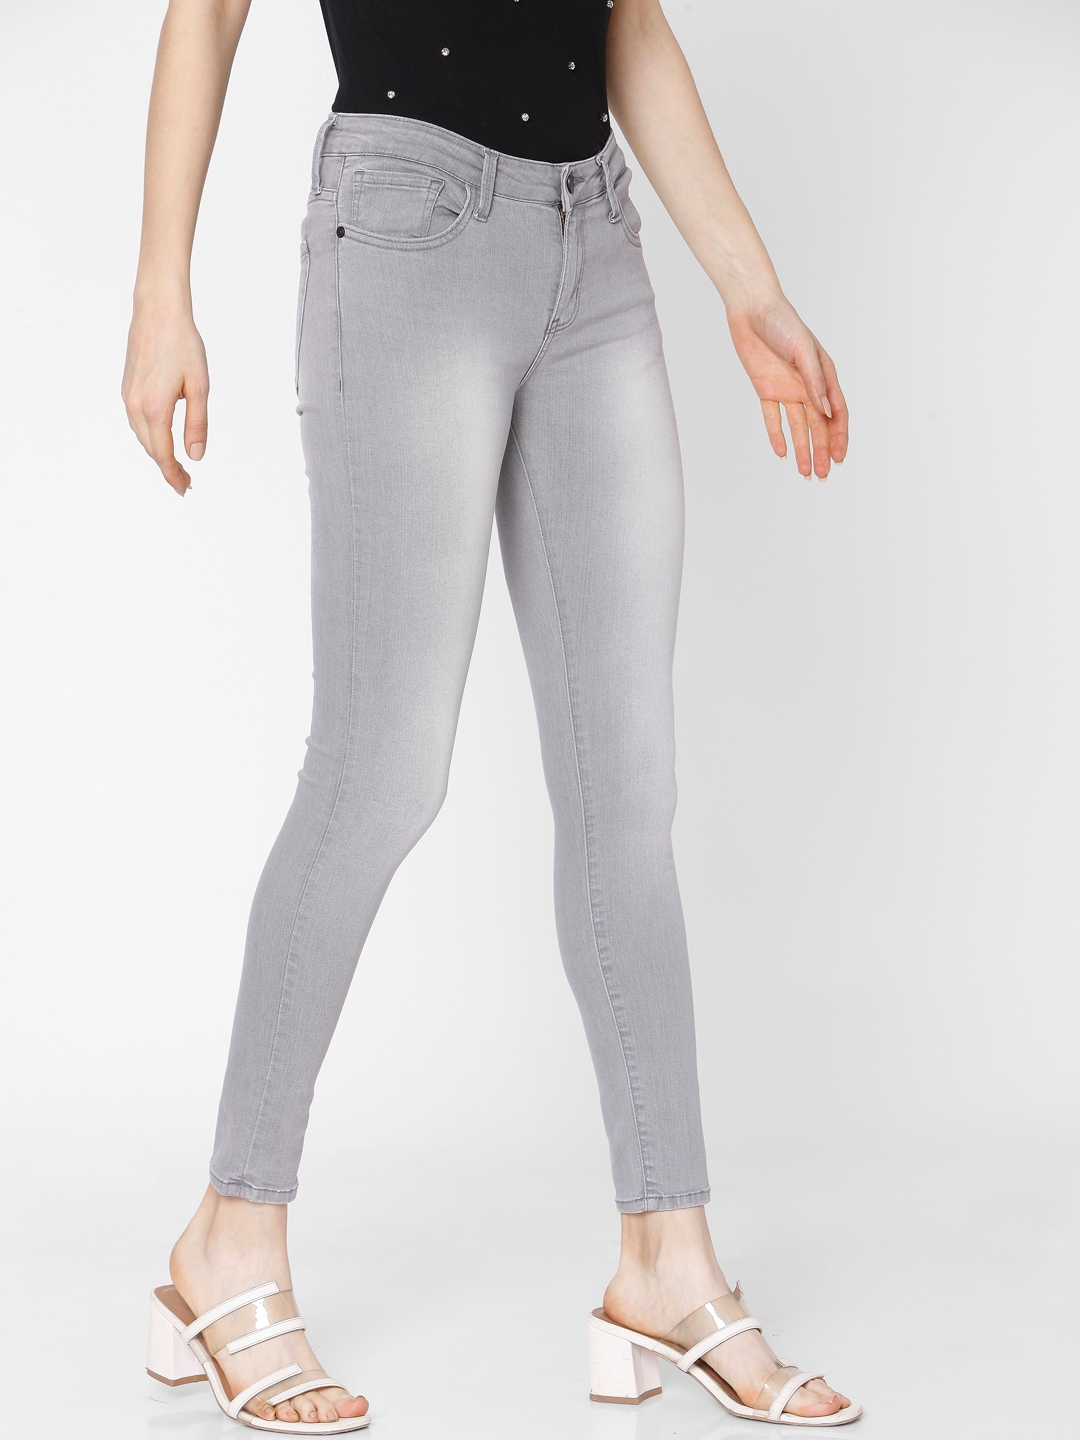 Spykar | Women's Grey Cotton Solid Skinny Jeans 3